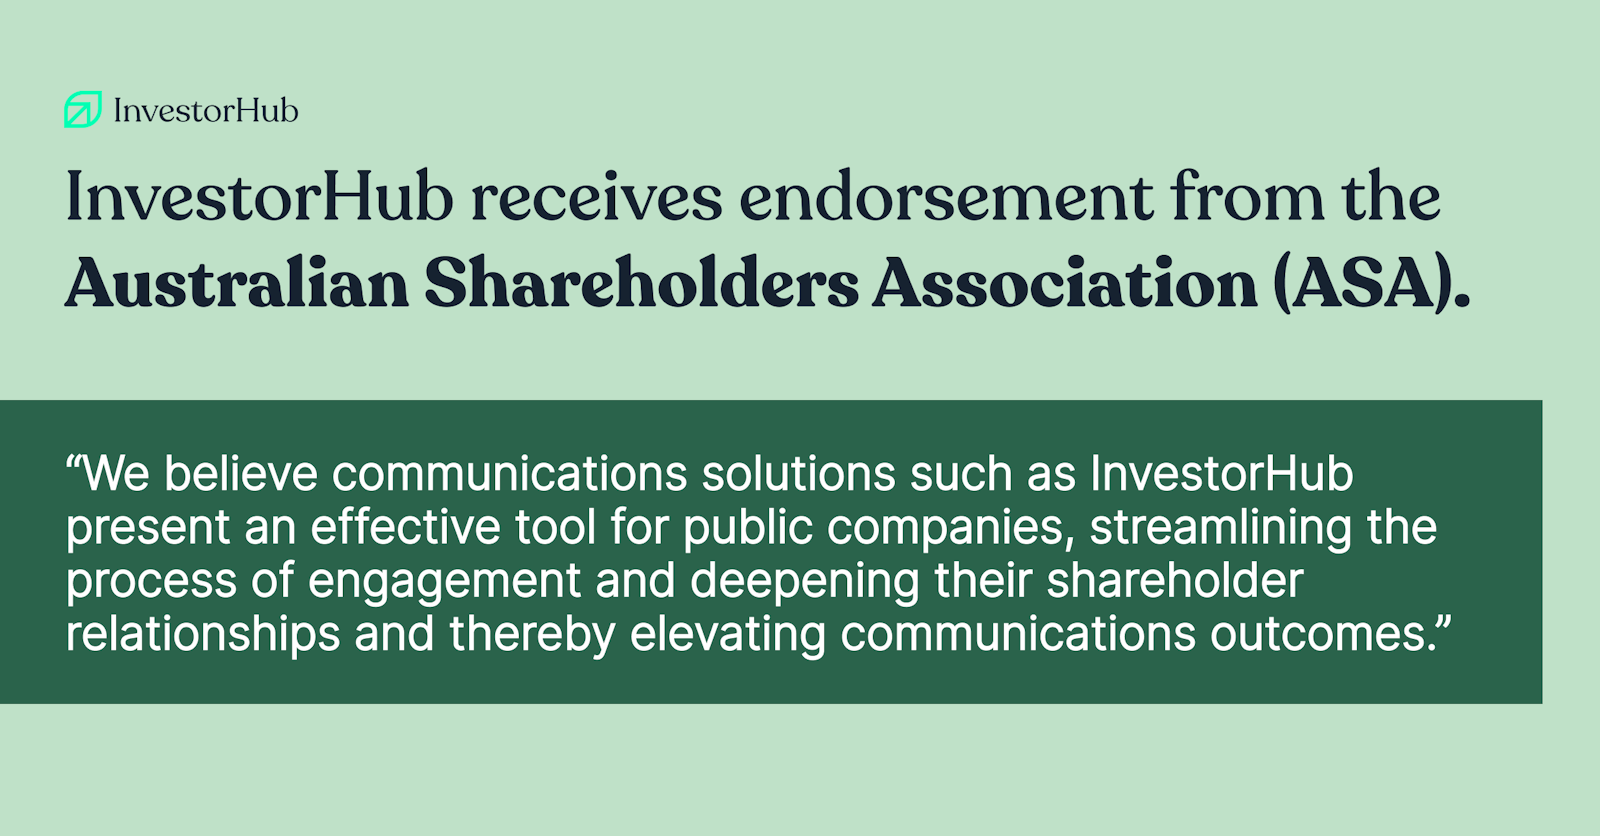 InvestorHub receives endorsement from the Australian Shareholders Association (ASA)